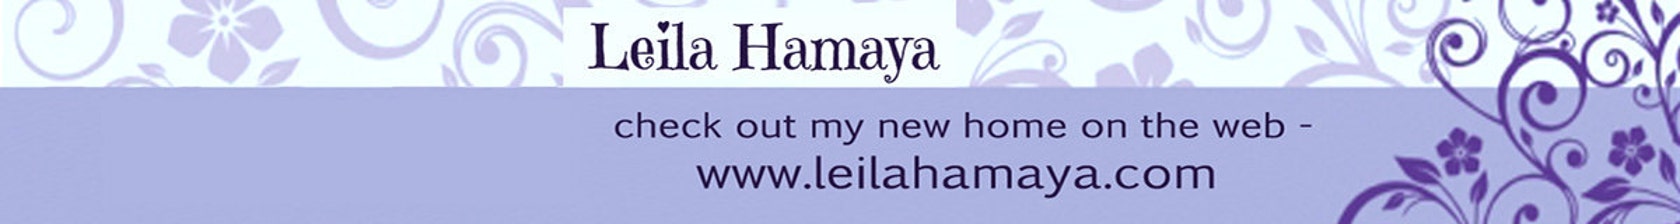 LeilaHamaya